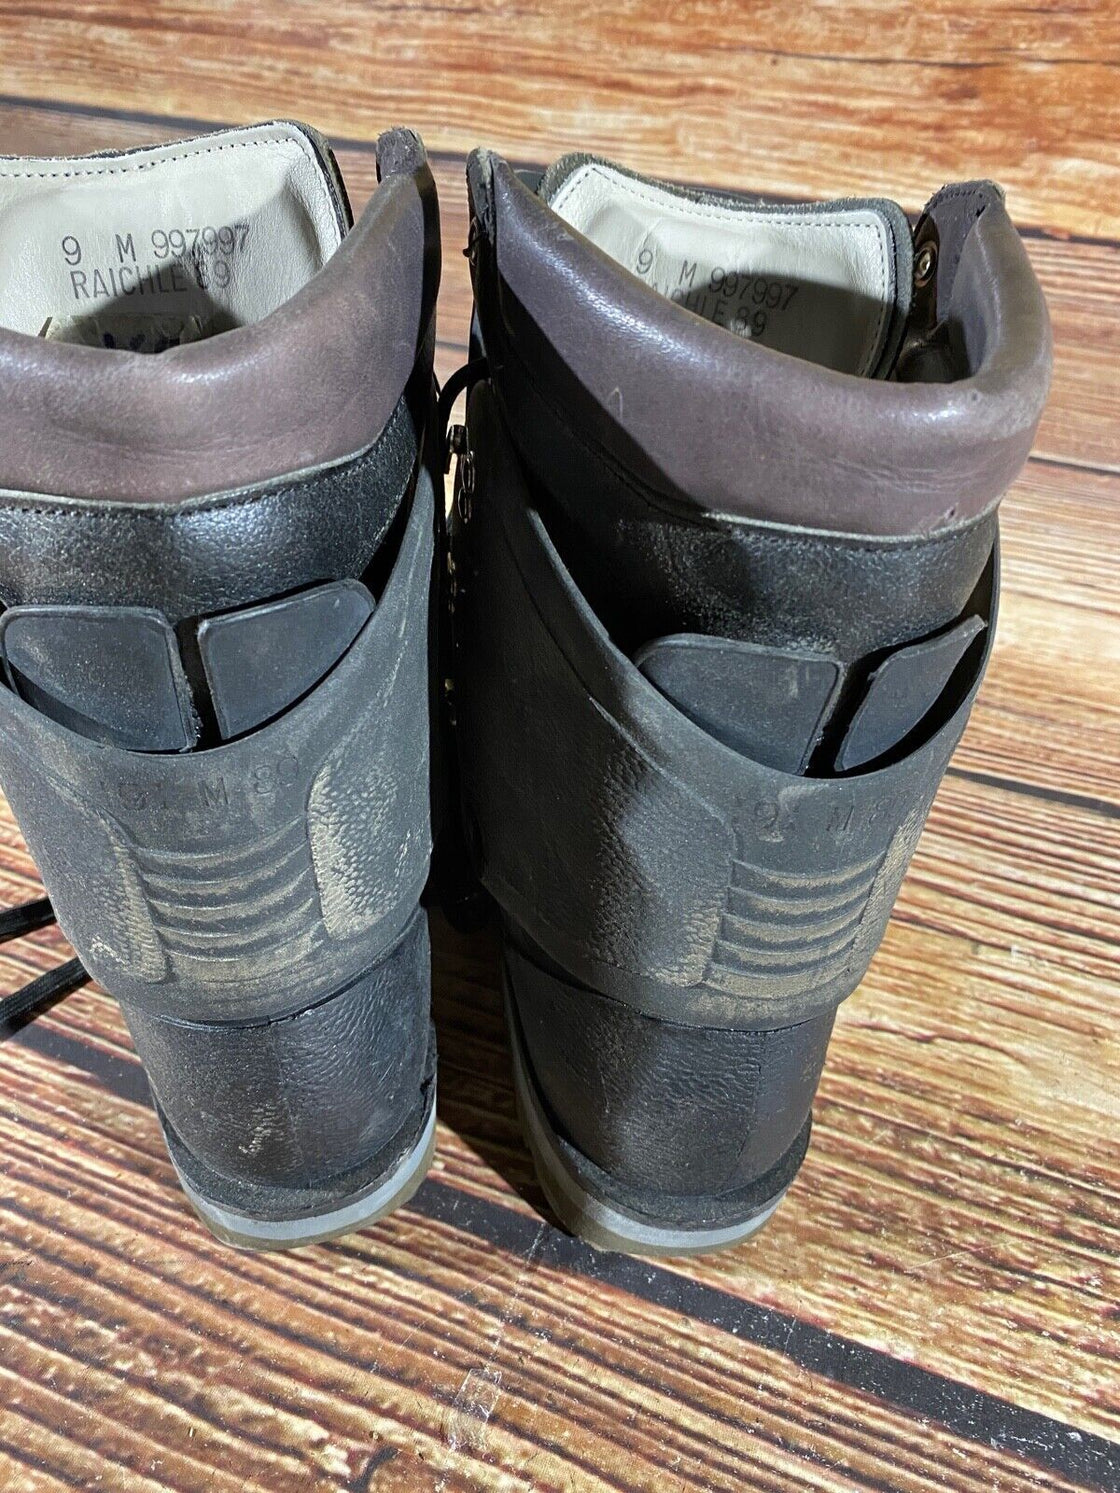 RAICHLE Hiking Boots Mountaineering Trekking Trail Shoes Size UK9 mondo 280